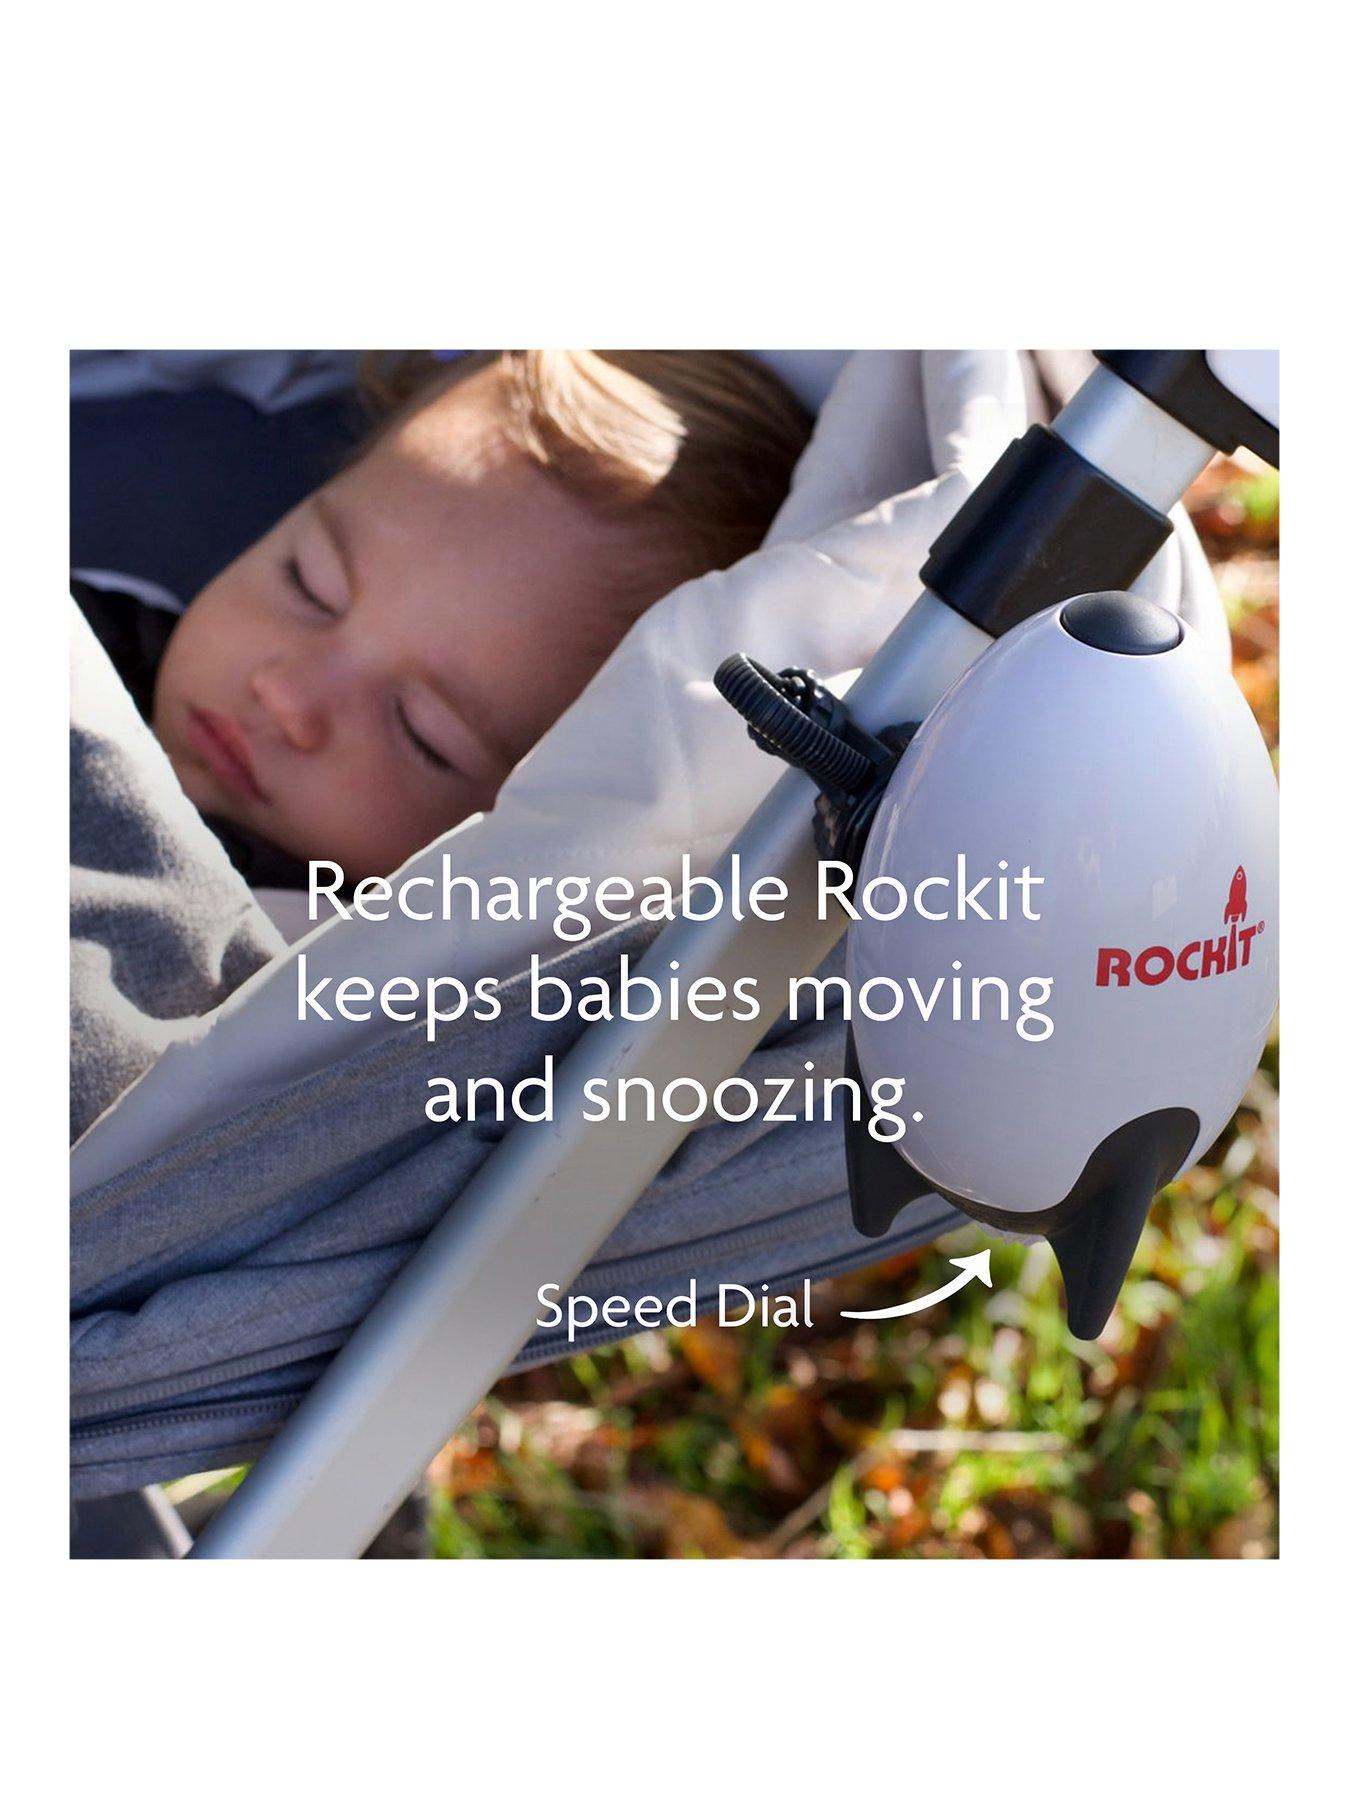 Rockit Portable Pram Rocker - Soothes & Rocks Baby to Sleep